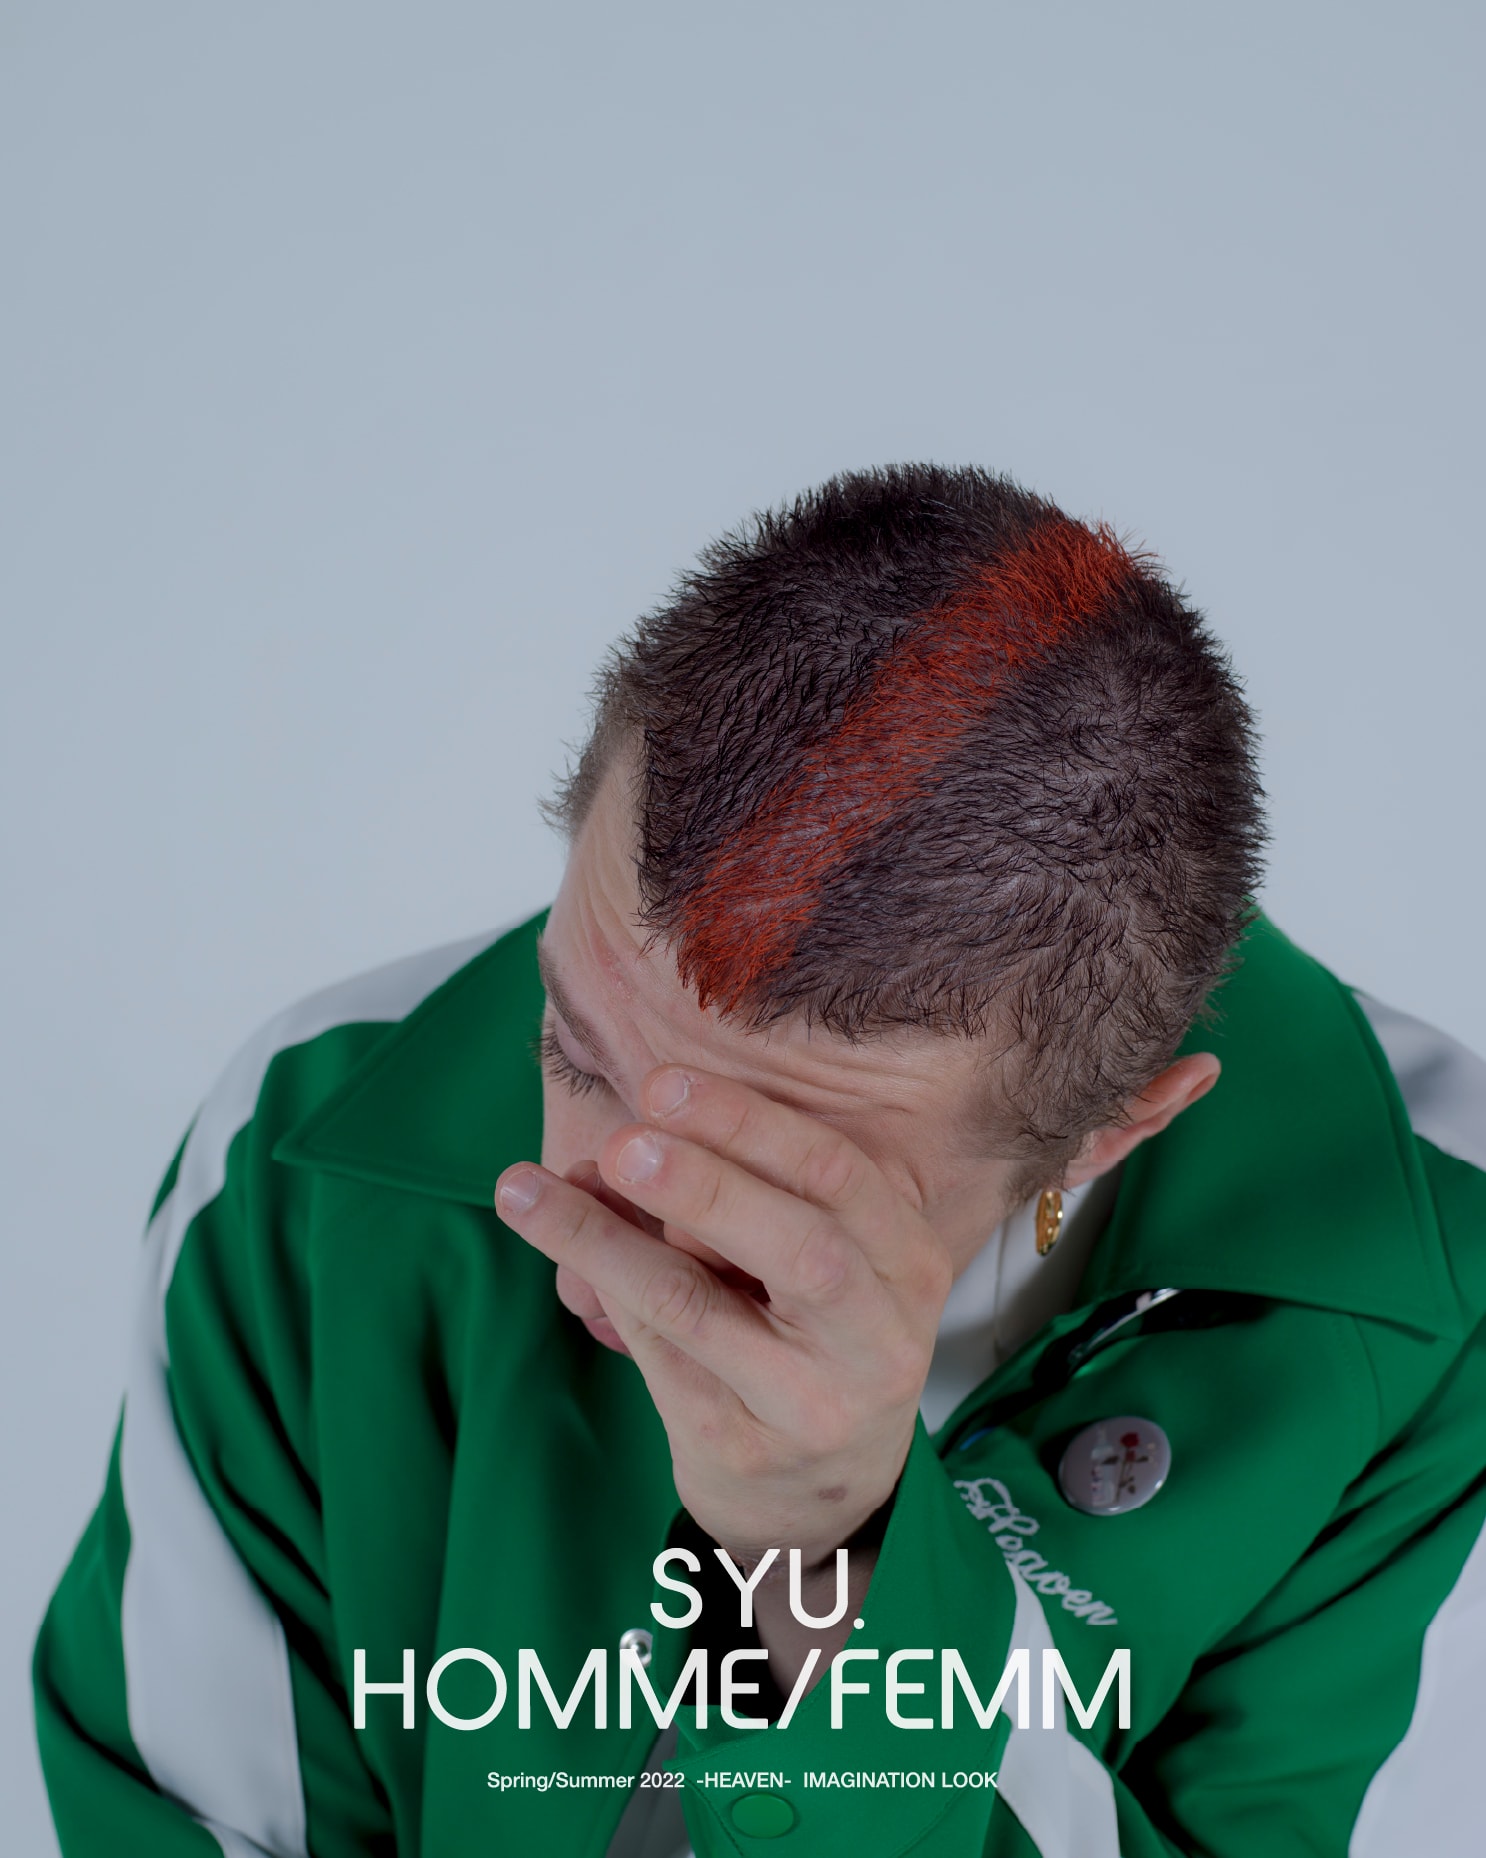 SYU.HOMME/FEMM 2022 春夏系列 Lookbook 正式發佈